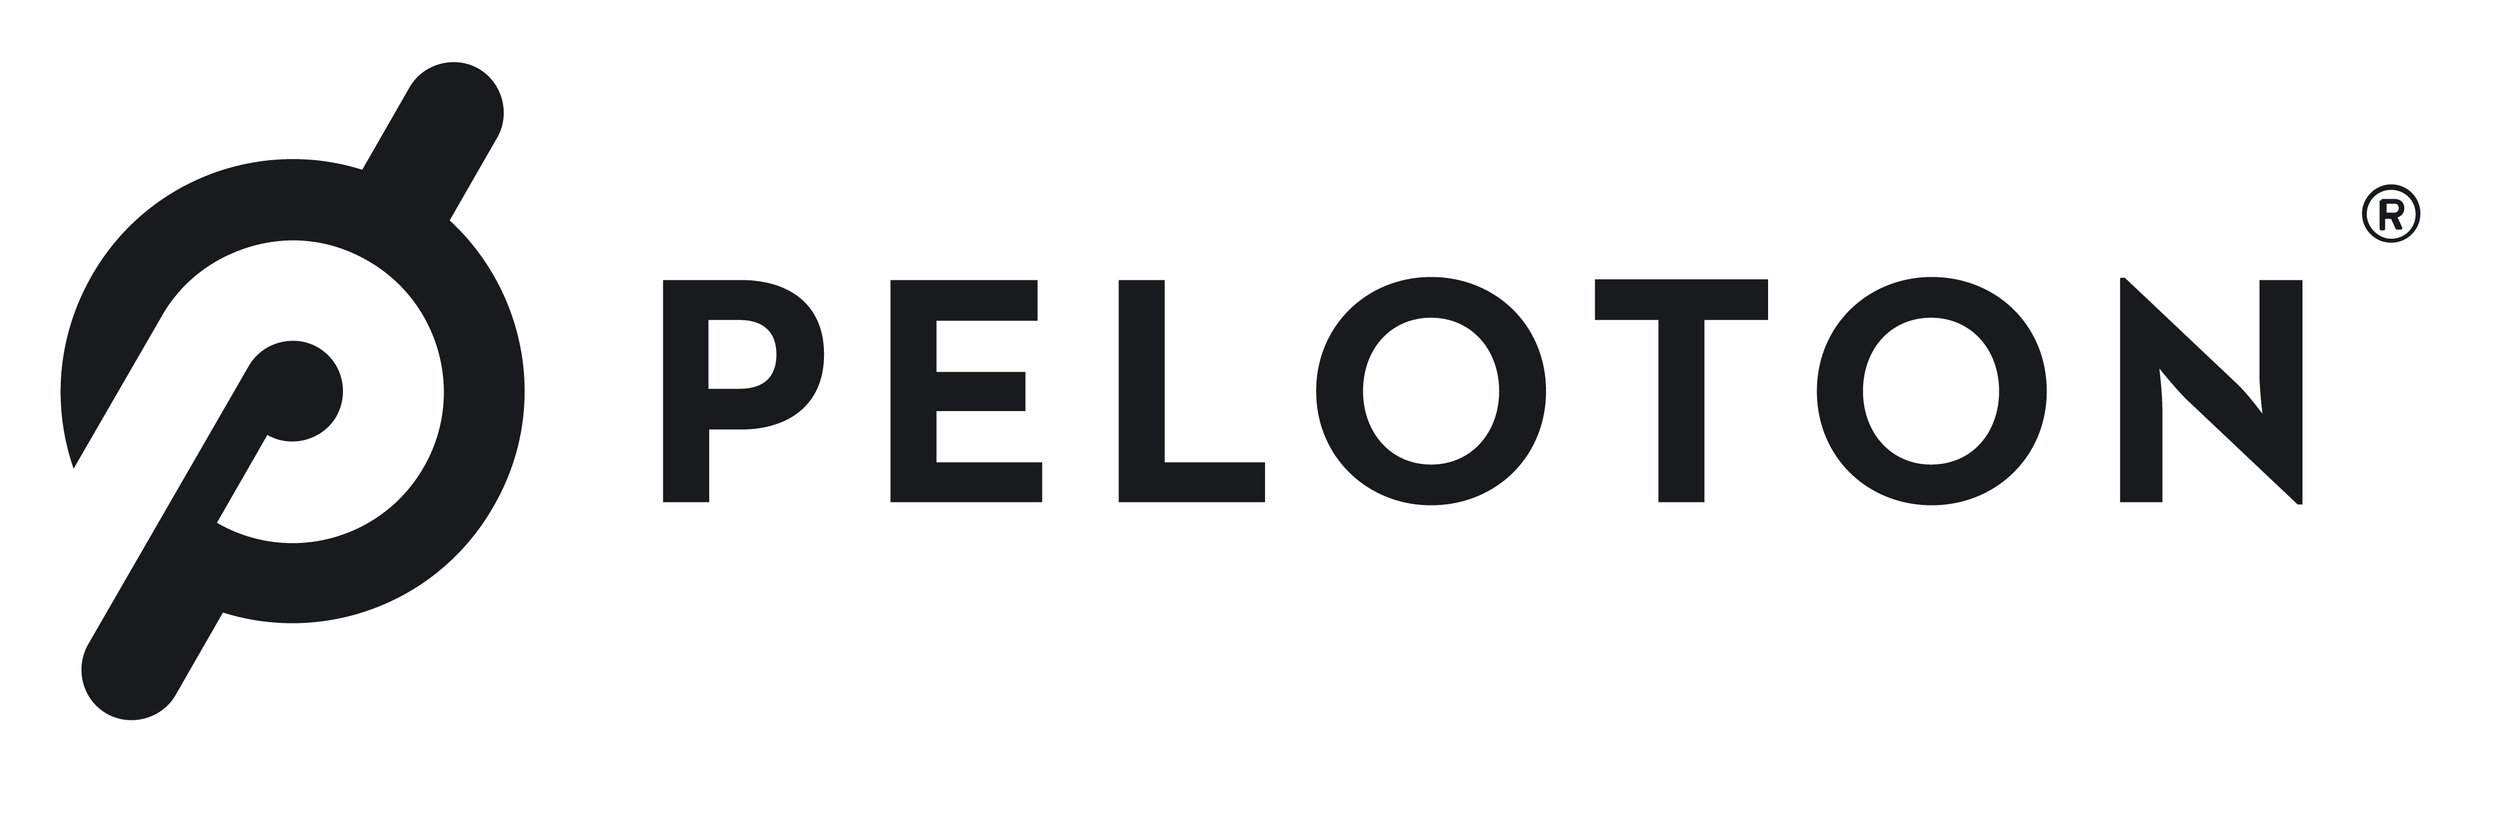 Peloton_(company)-Logo.jpg